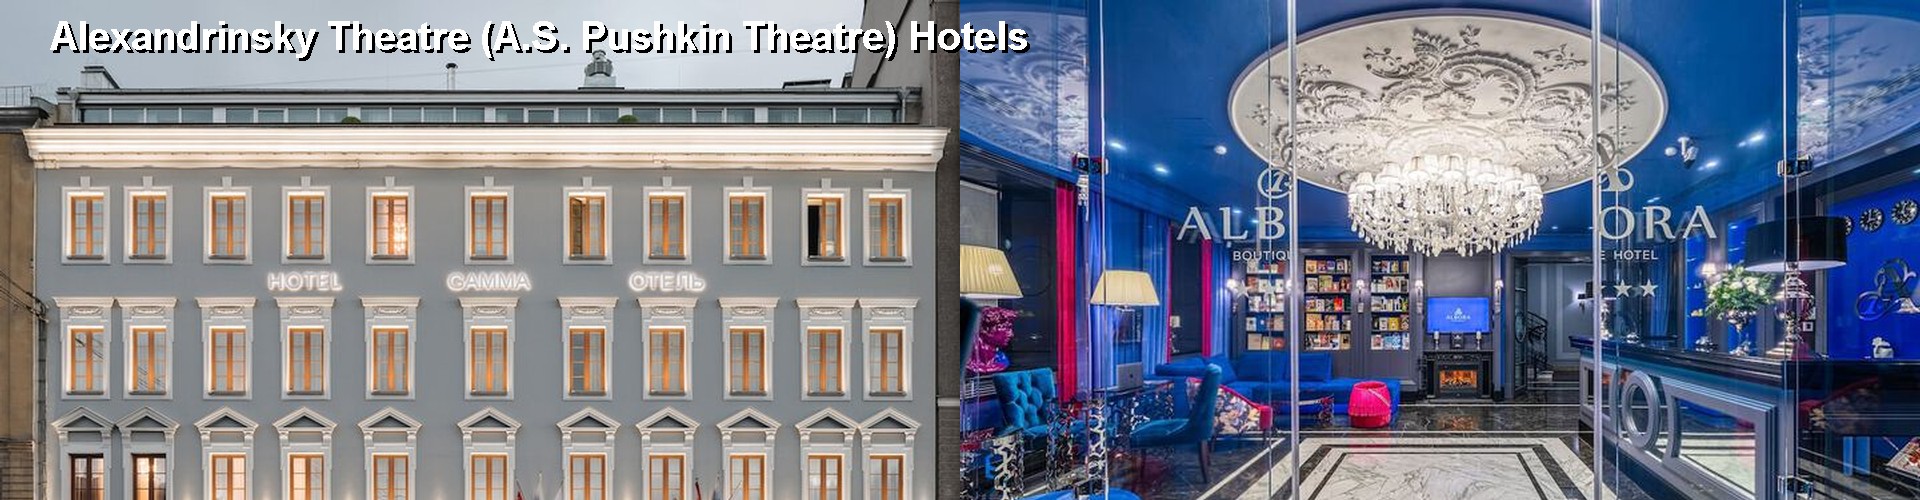 5 Best Hotels near Alexandrinsky Theatre (A.S. Pushkin Theatre)